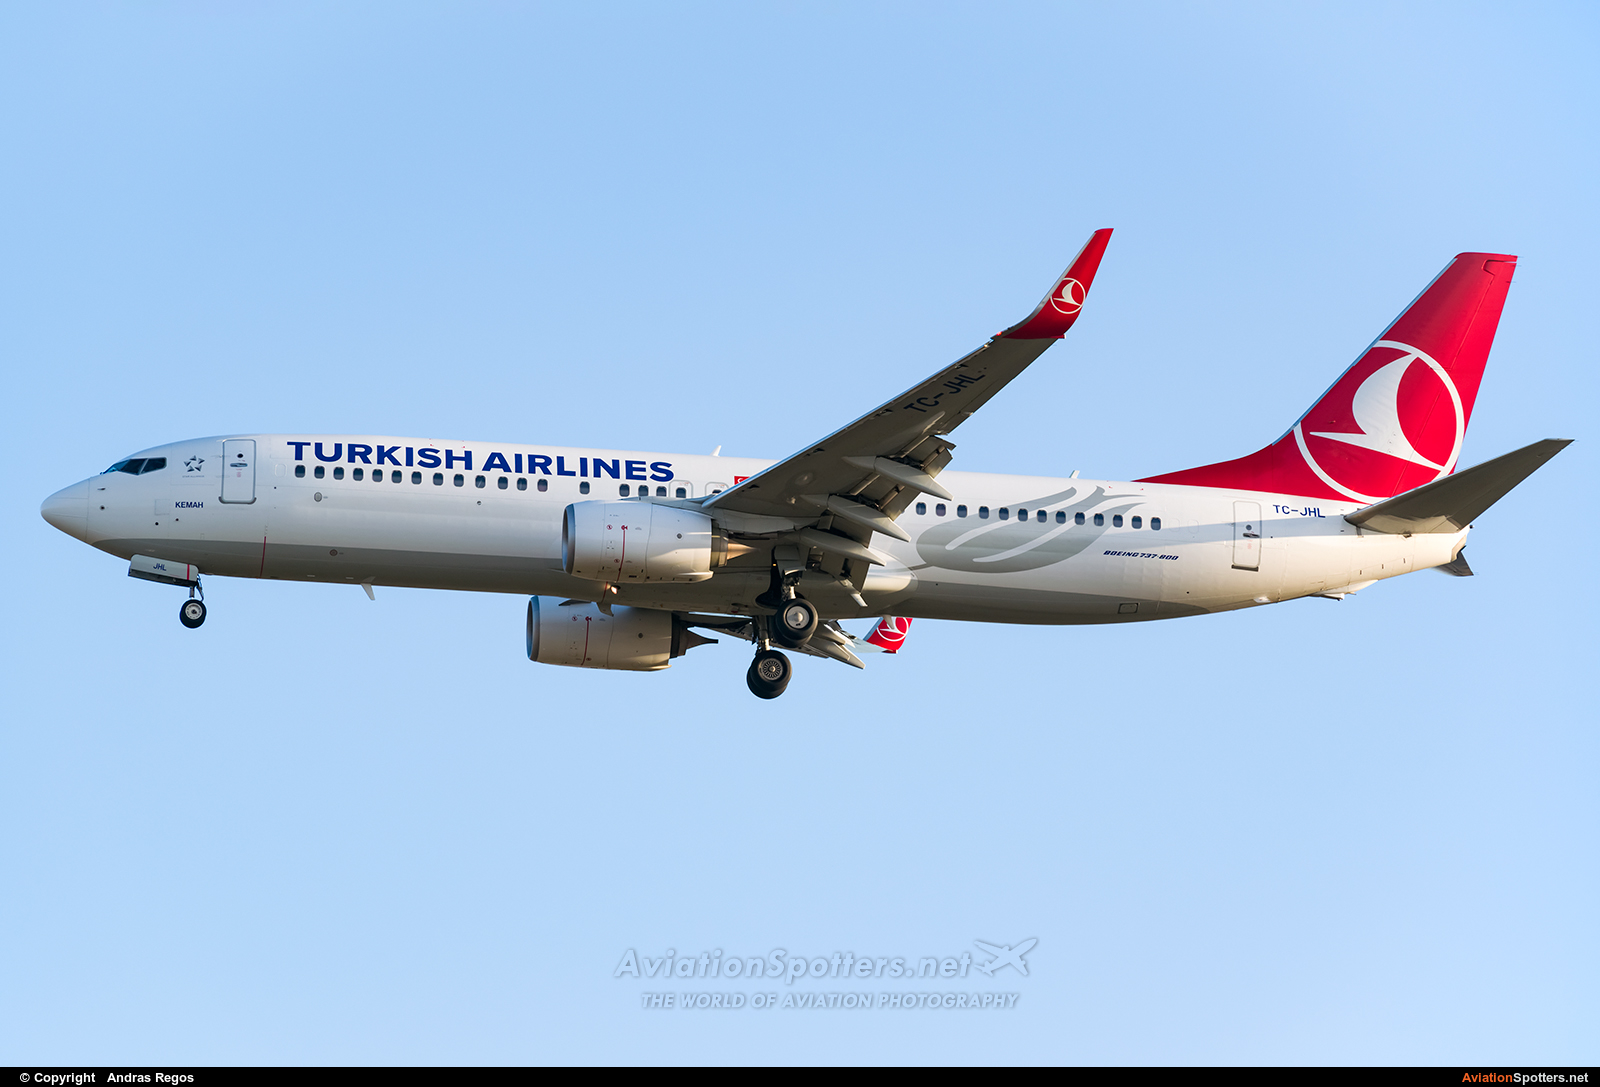 Turkish Airlines  -  737-800  (TC-JHL) By Andras Regos (regos)